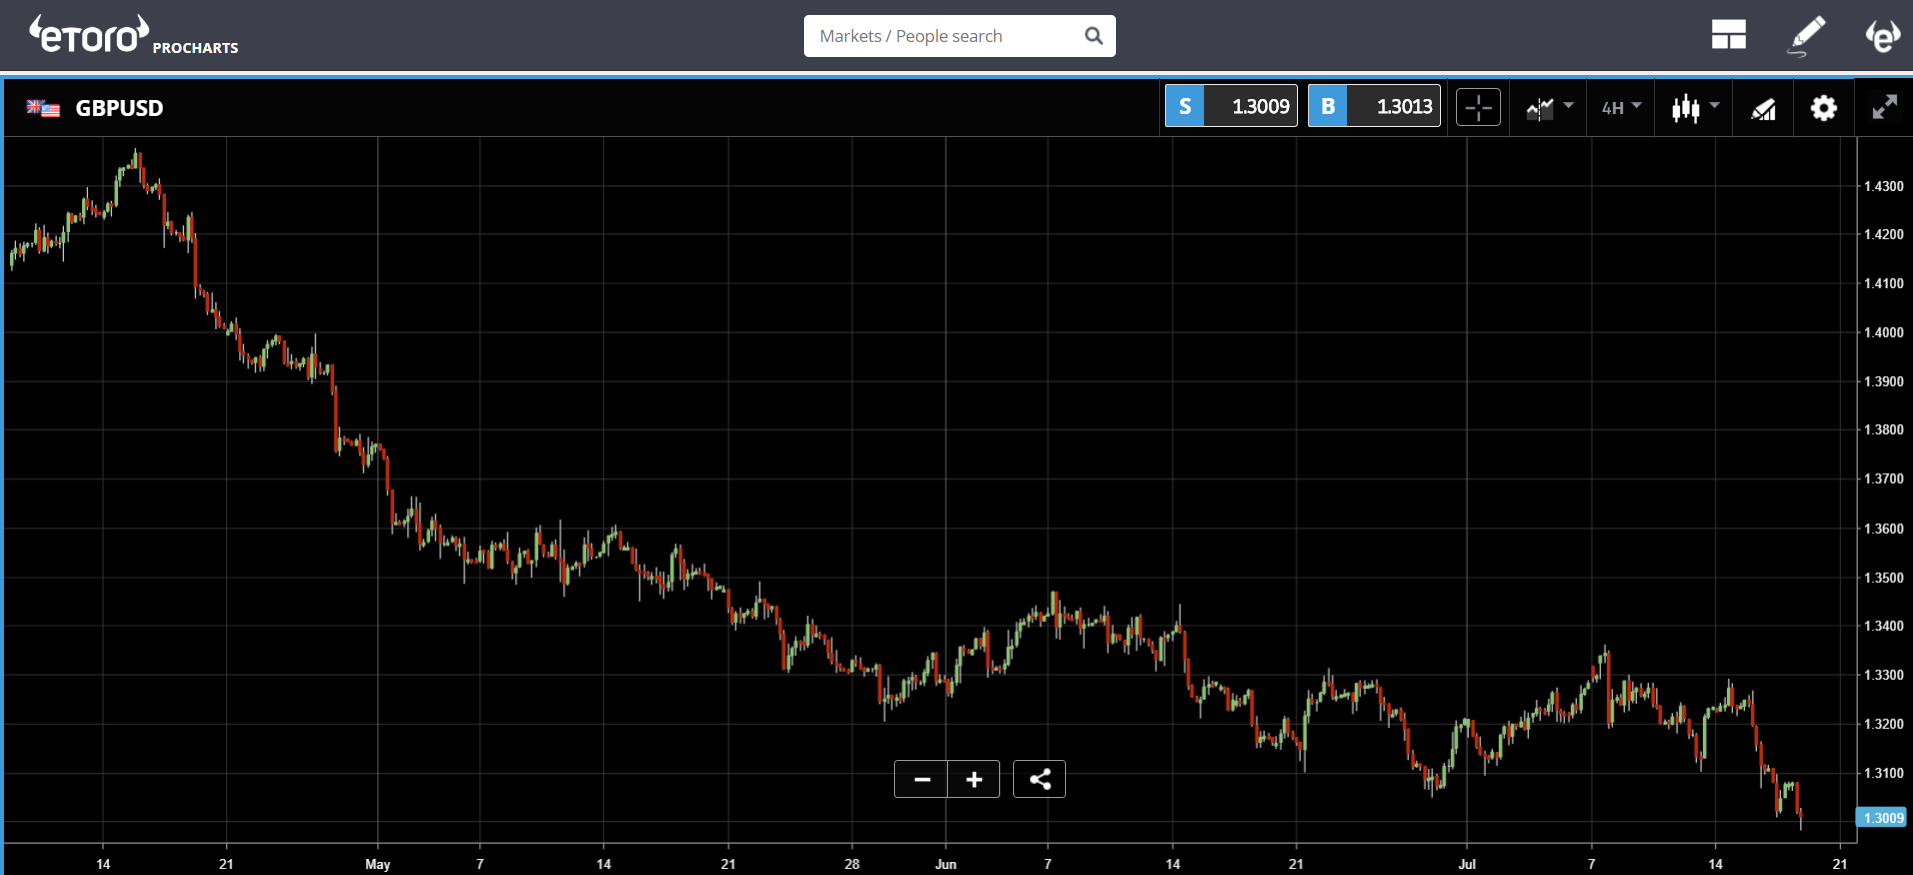 GBP/USD Performance Chart